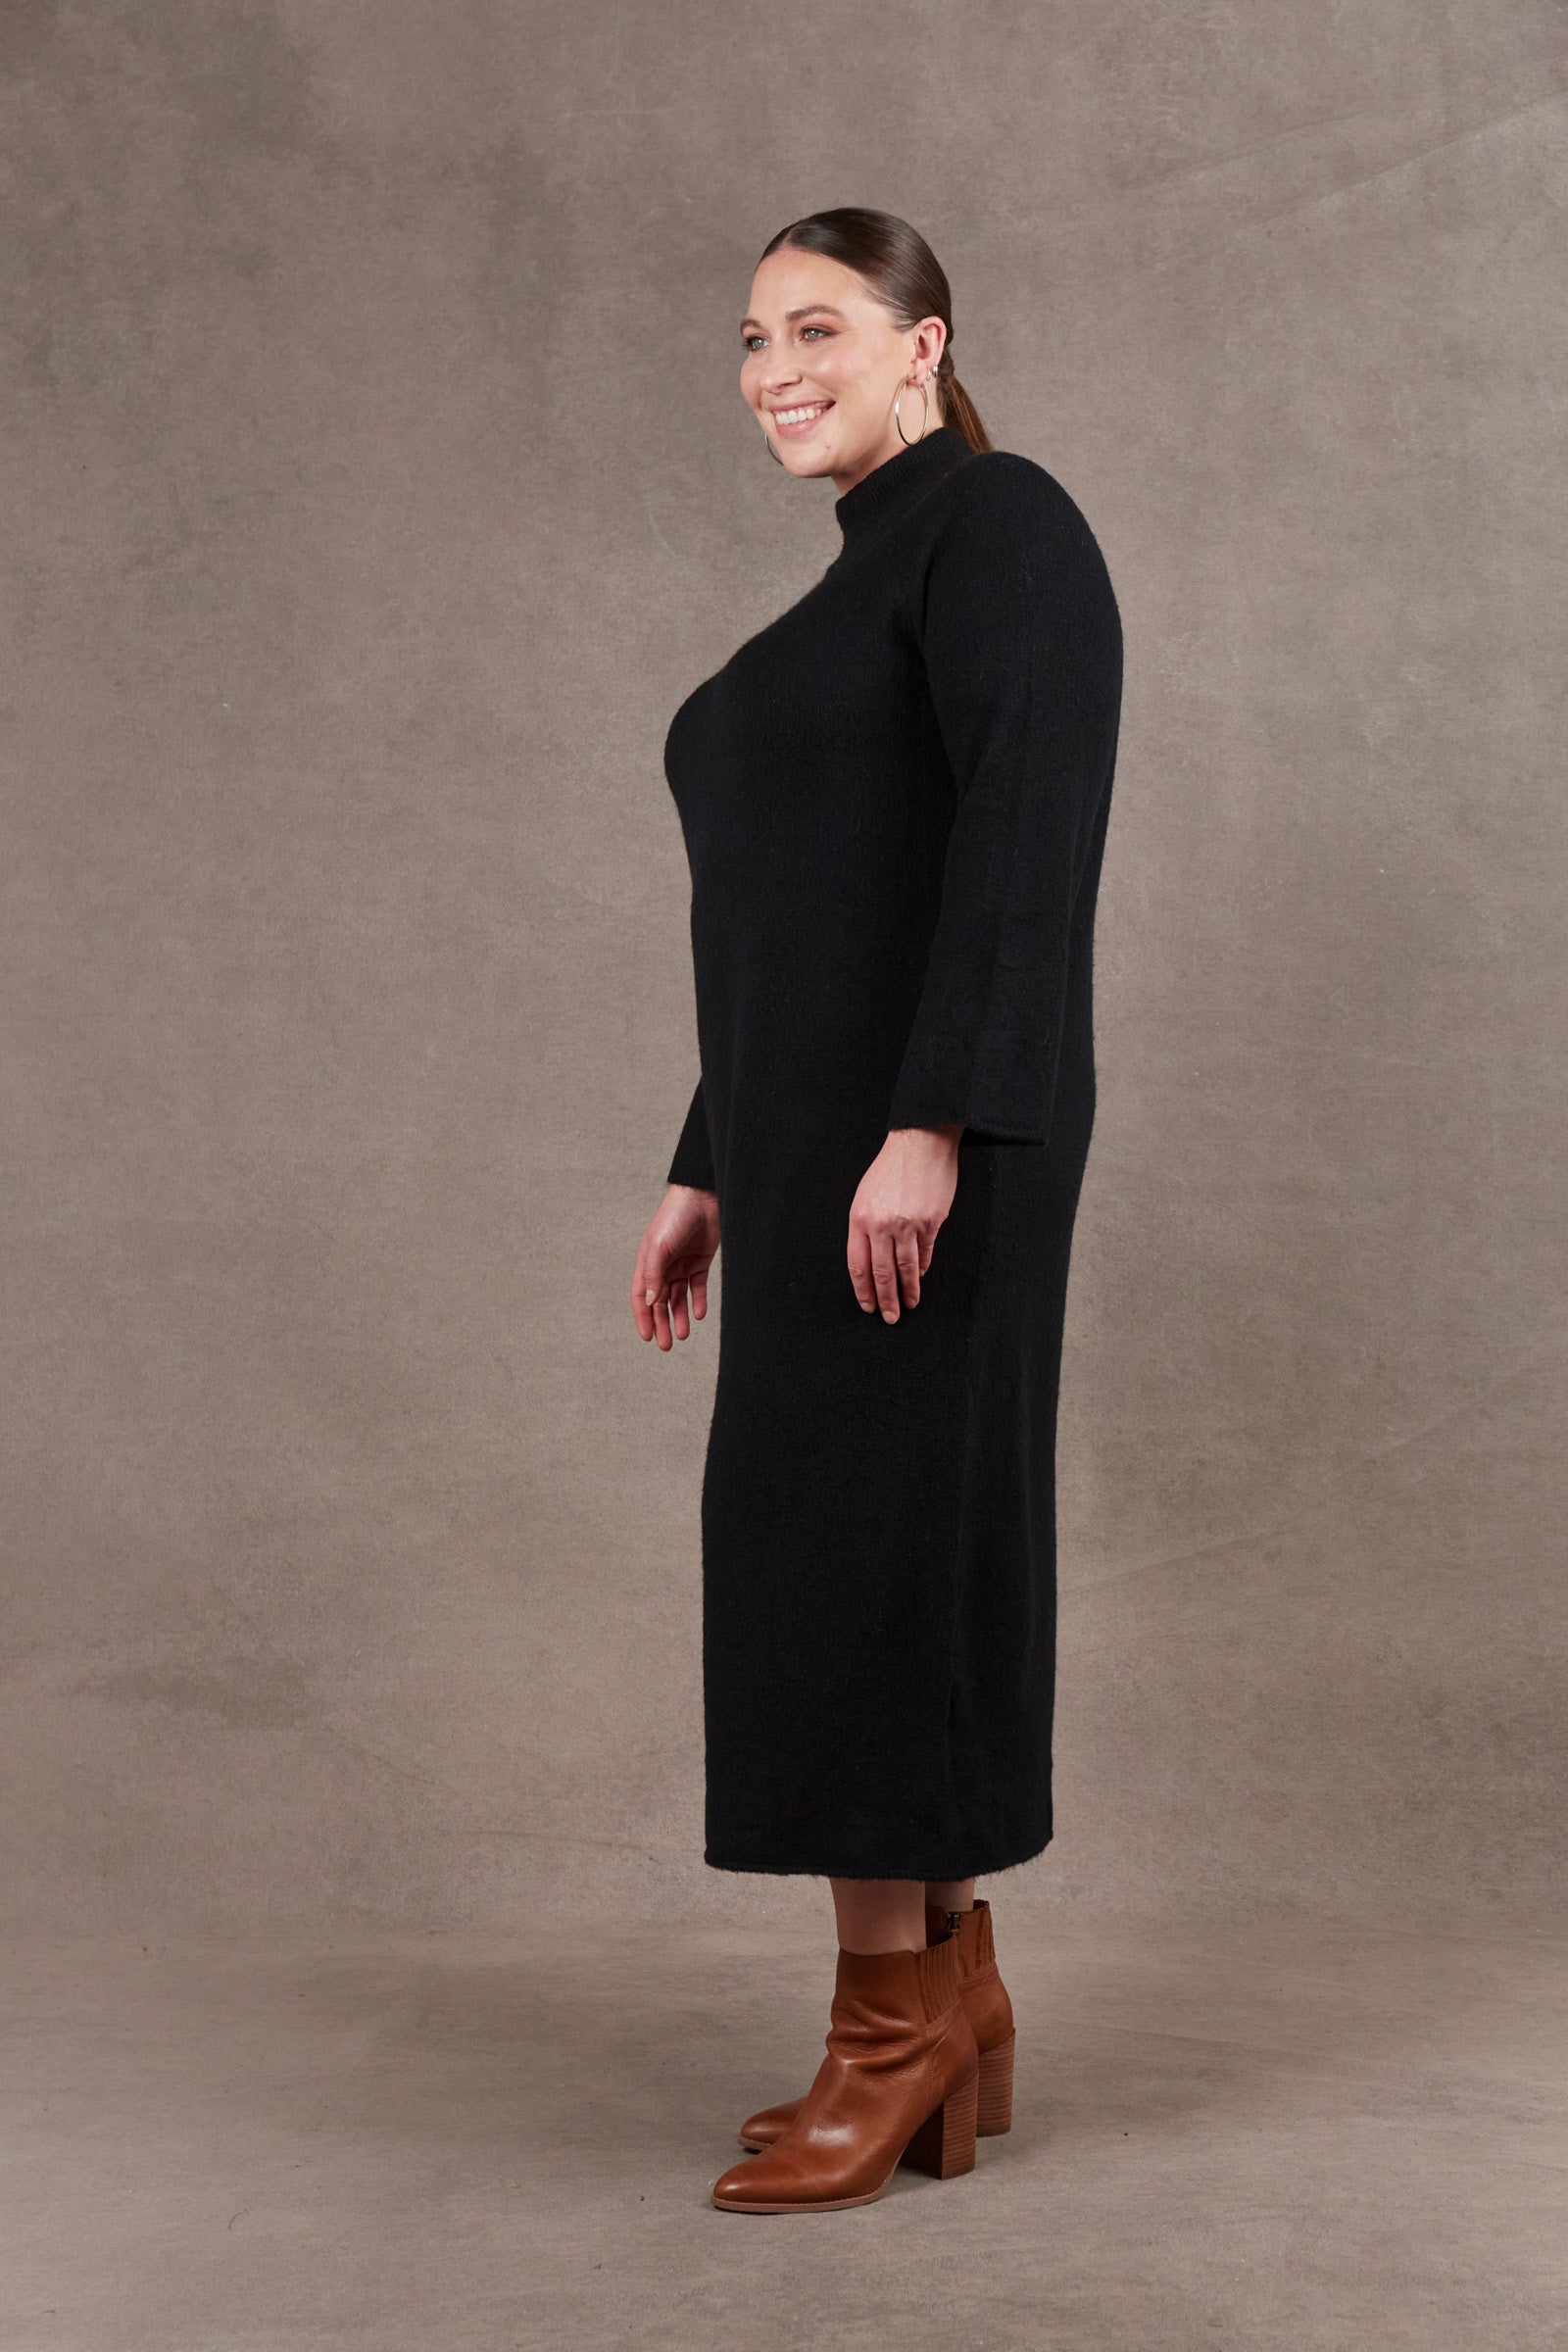 Paarl Tie Knit Dress - Ebony - eb&ive Clothing - Knit Dress One Size